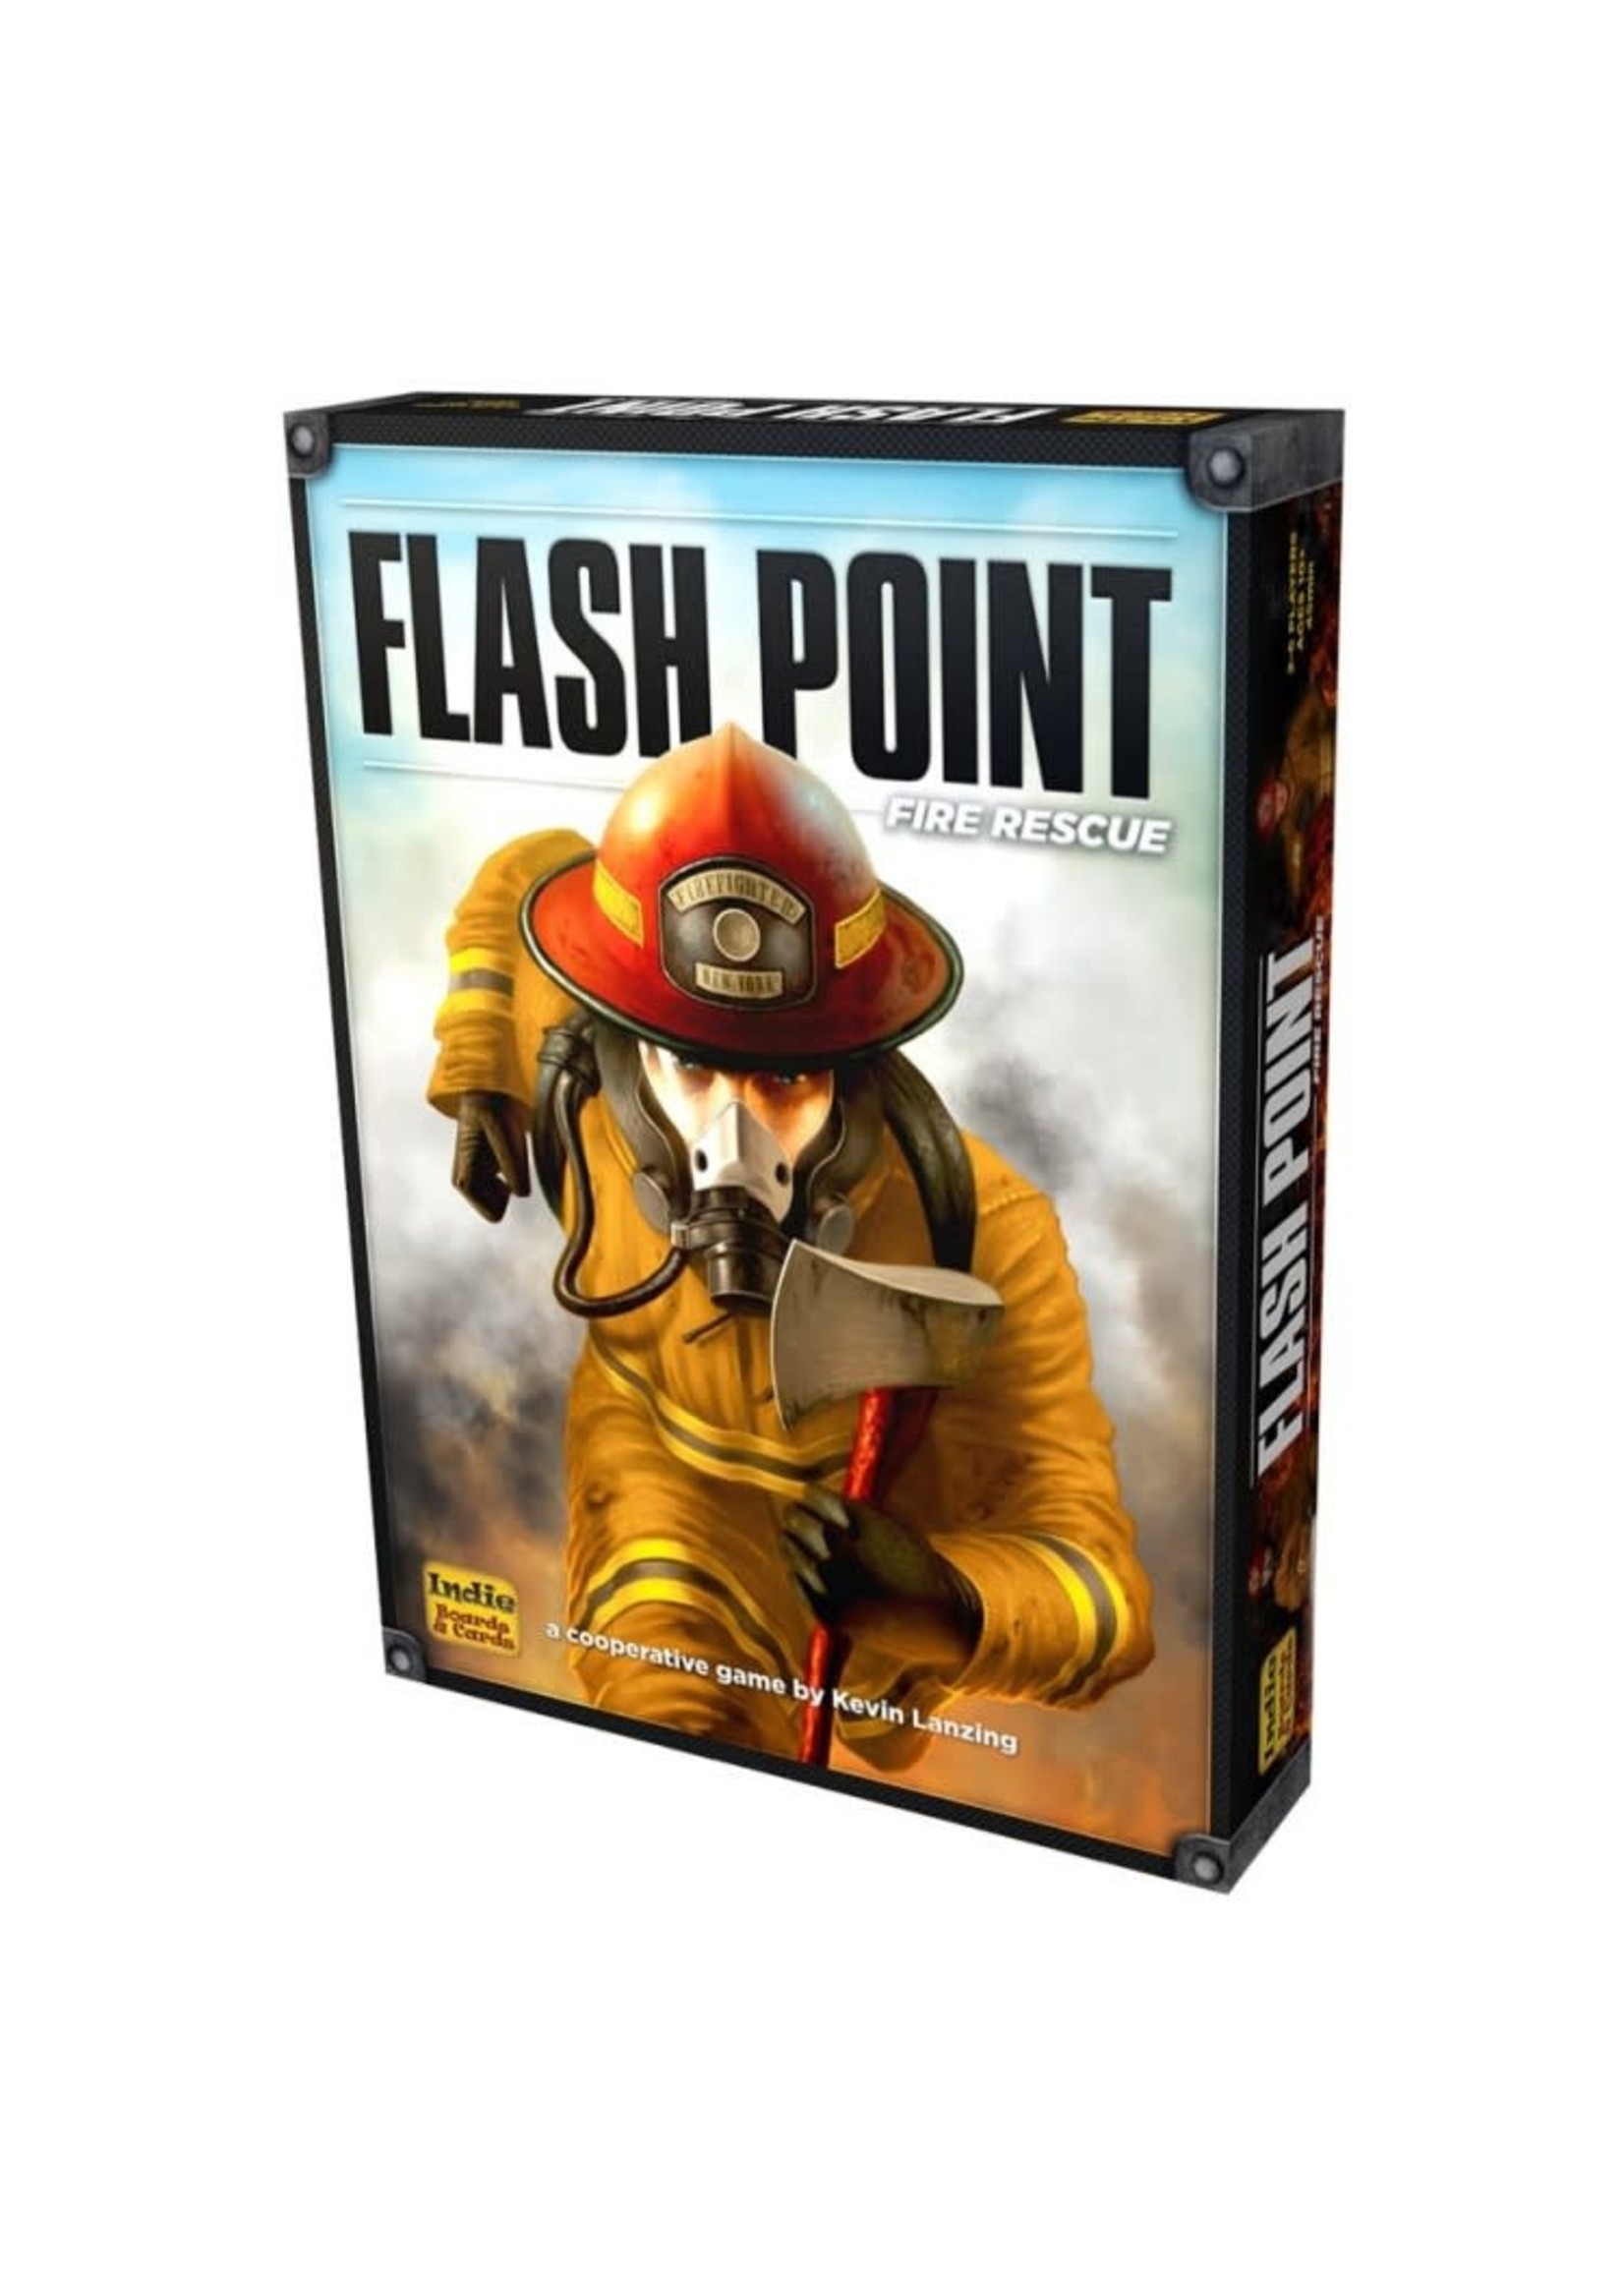 Rental RENTAL - Flashpoint 2 lb 5.4 oz